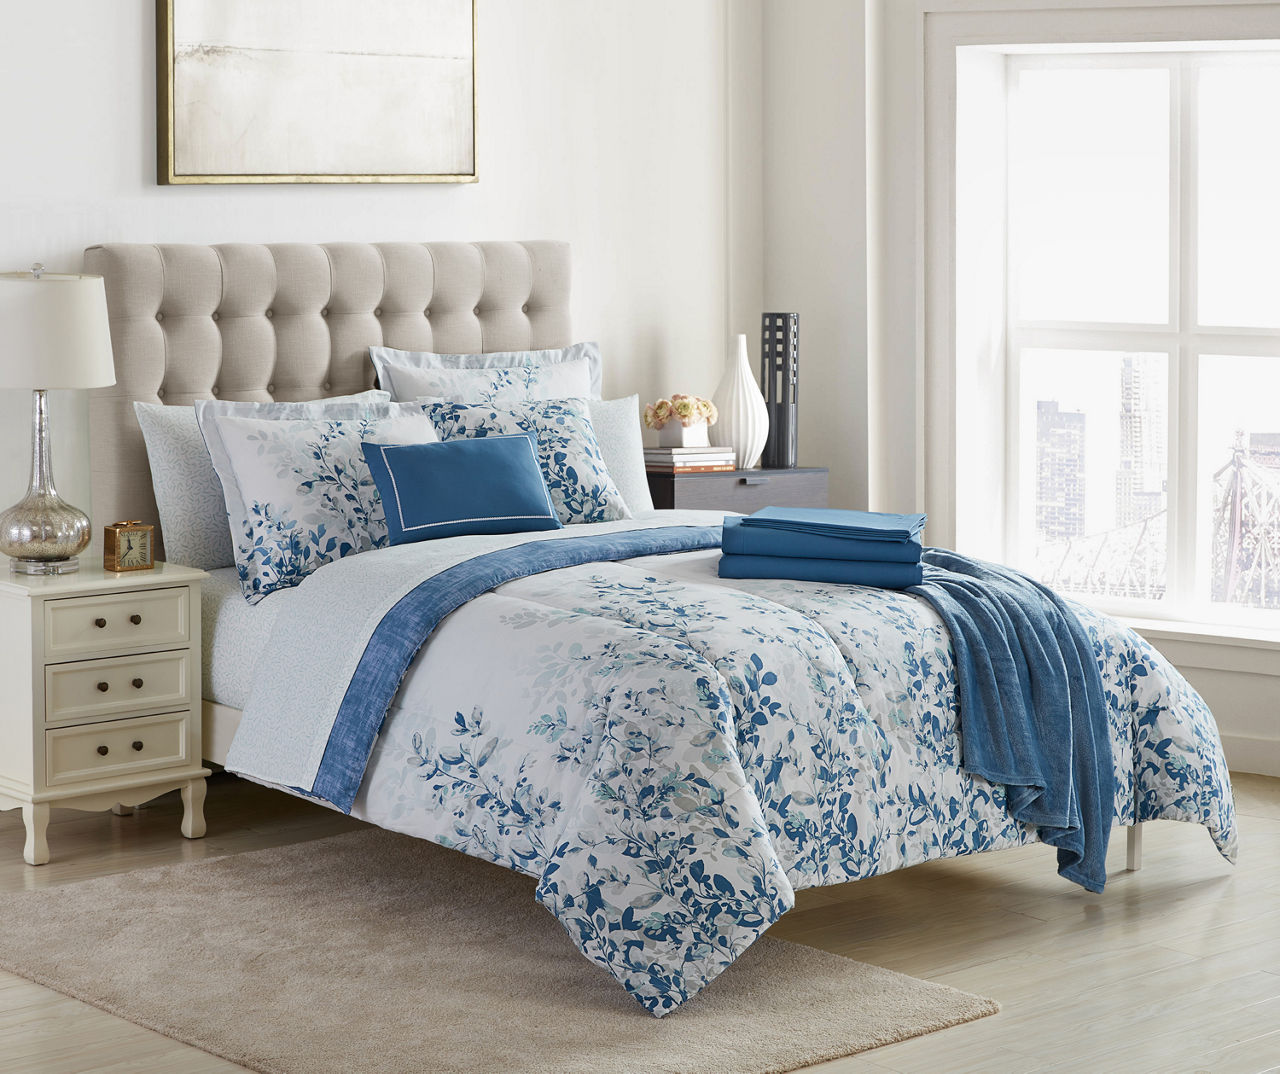 Misverstand lied fonds Living Colors Blue & White Floral Queen 14-Piece Comforter Set | Big Lots